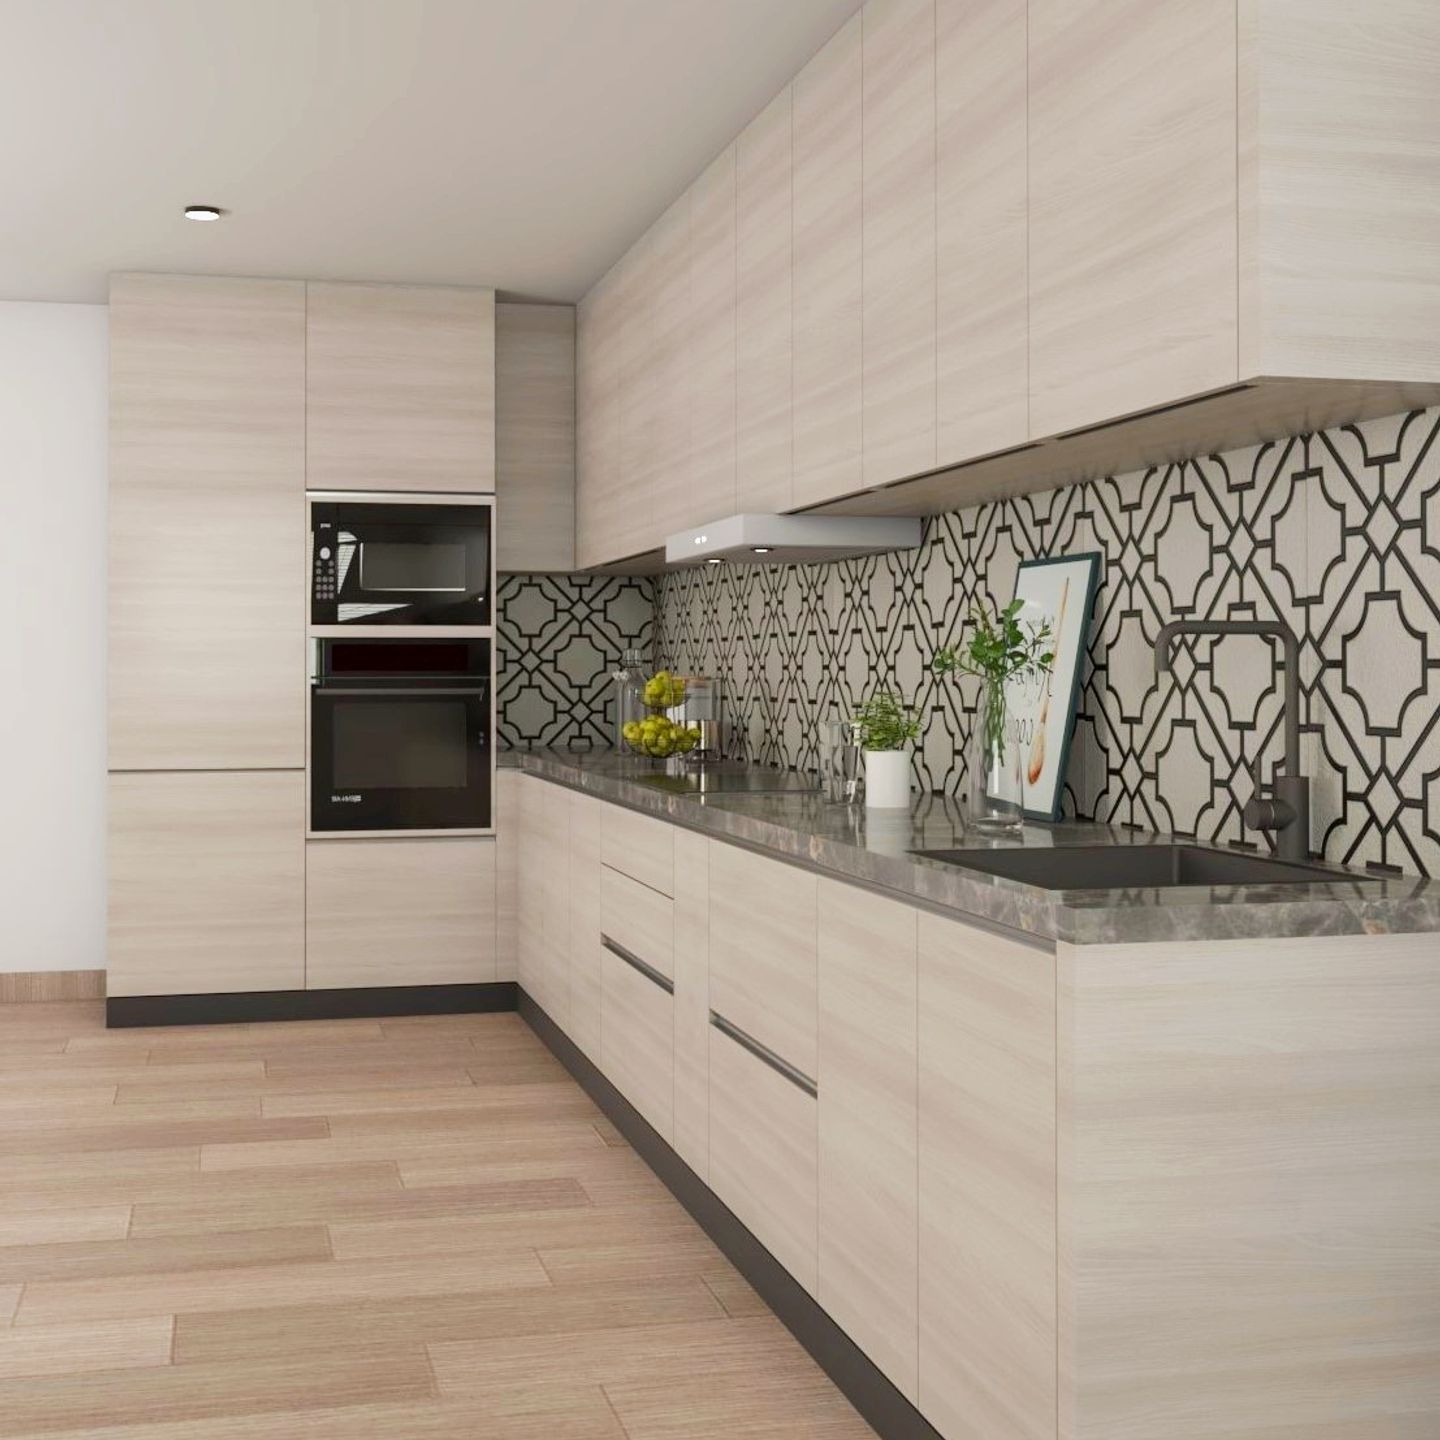 L-Shaped Light Wood Kitchen Design With Black And White Backsplash - Livspace